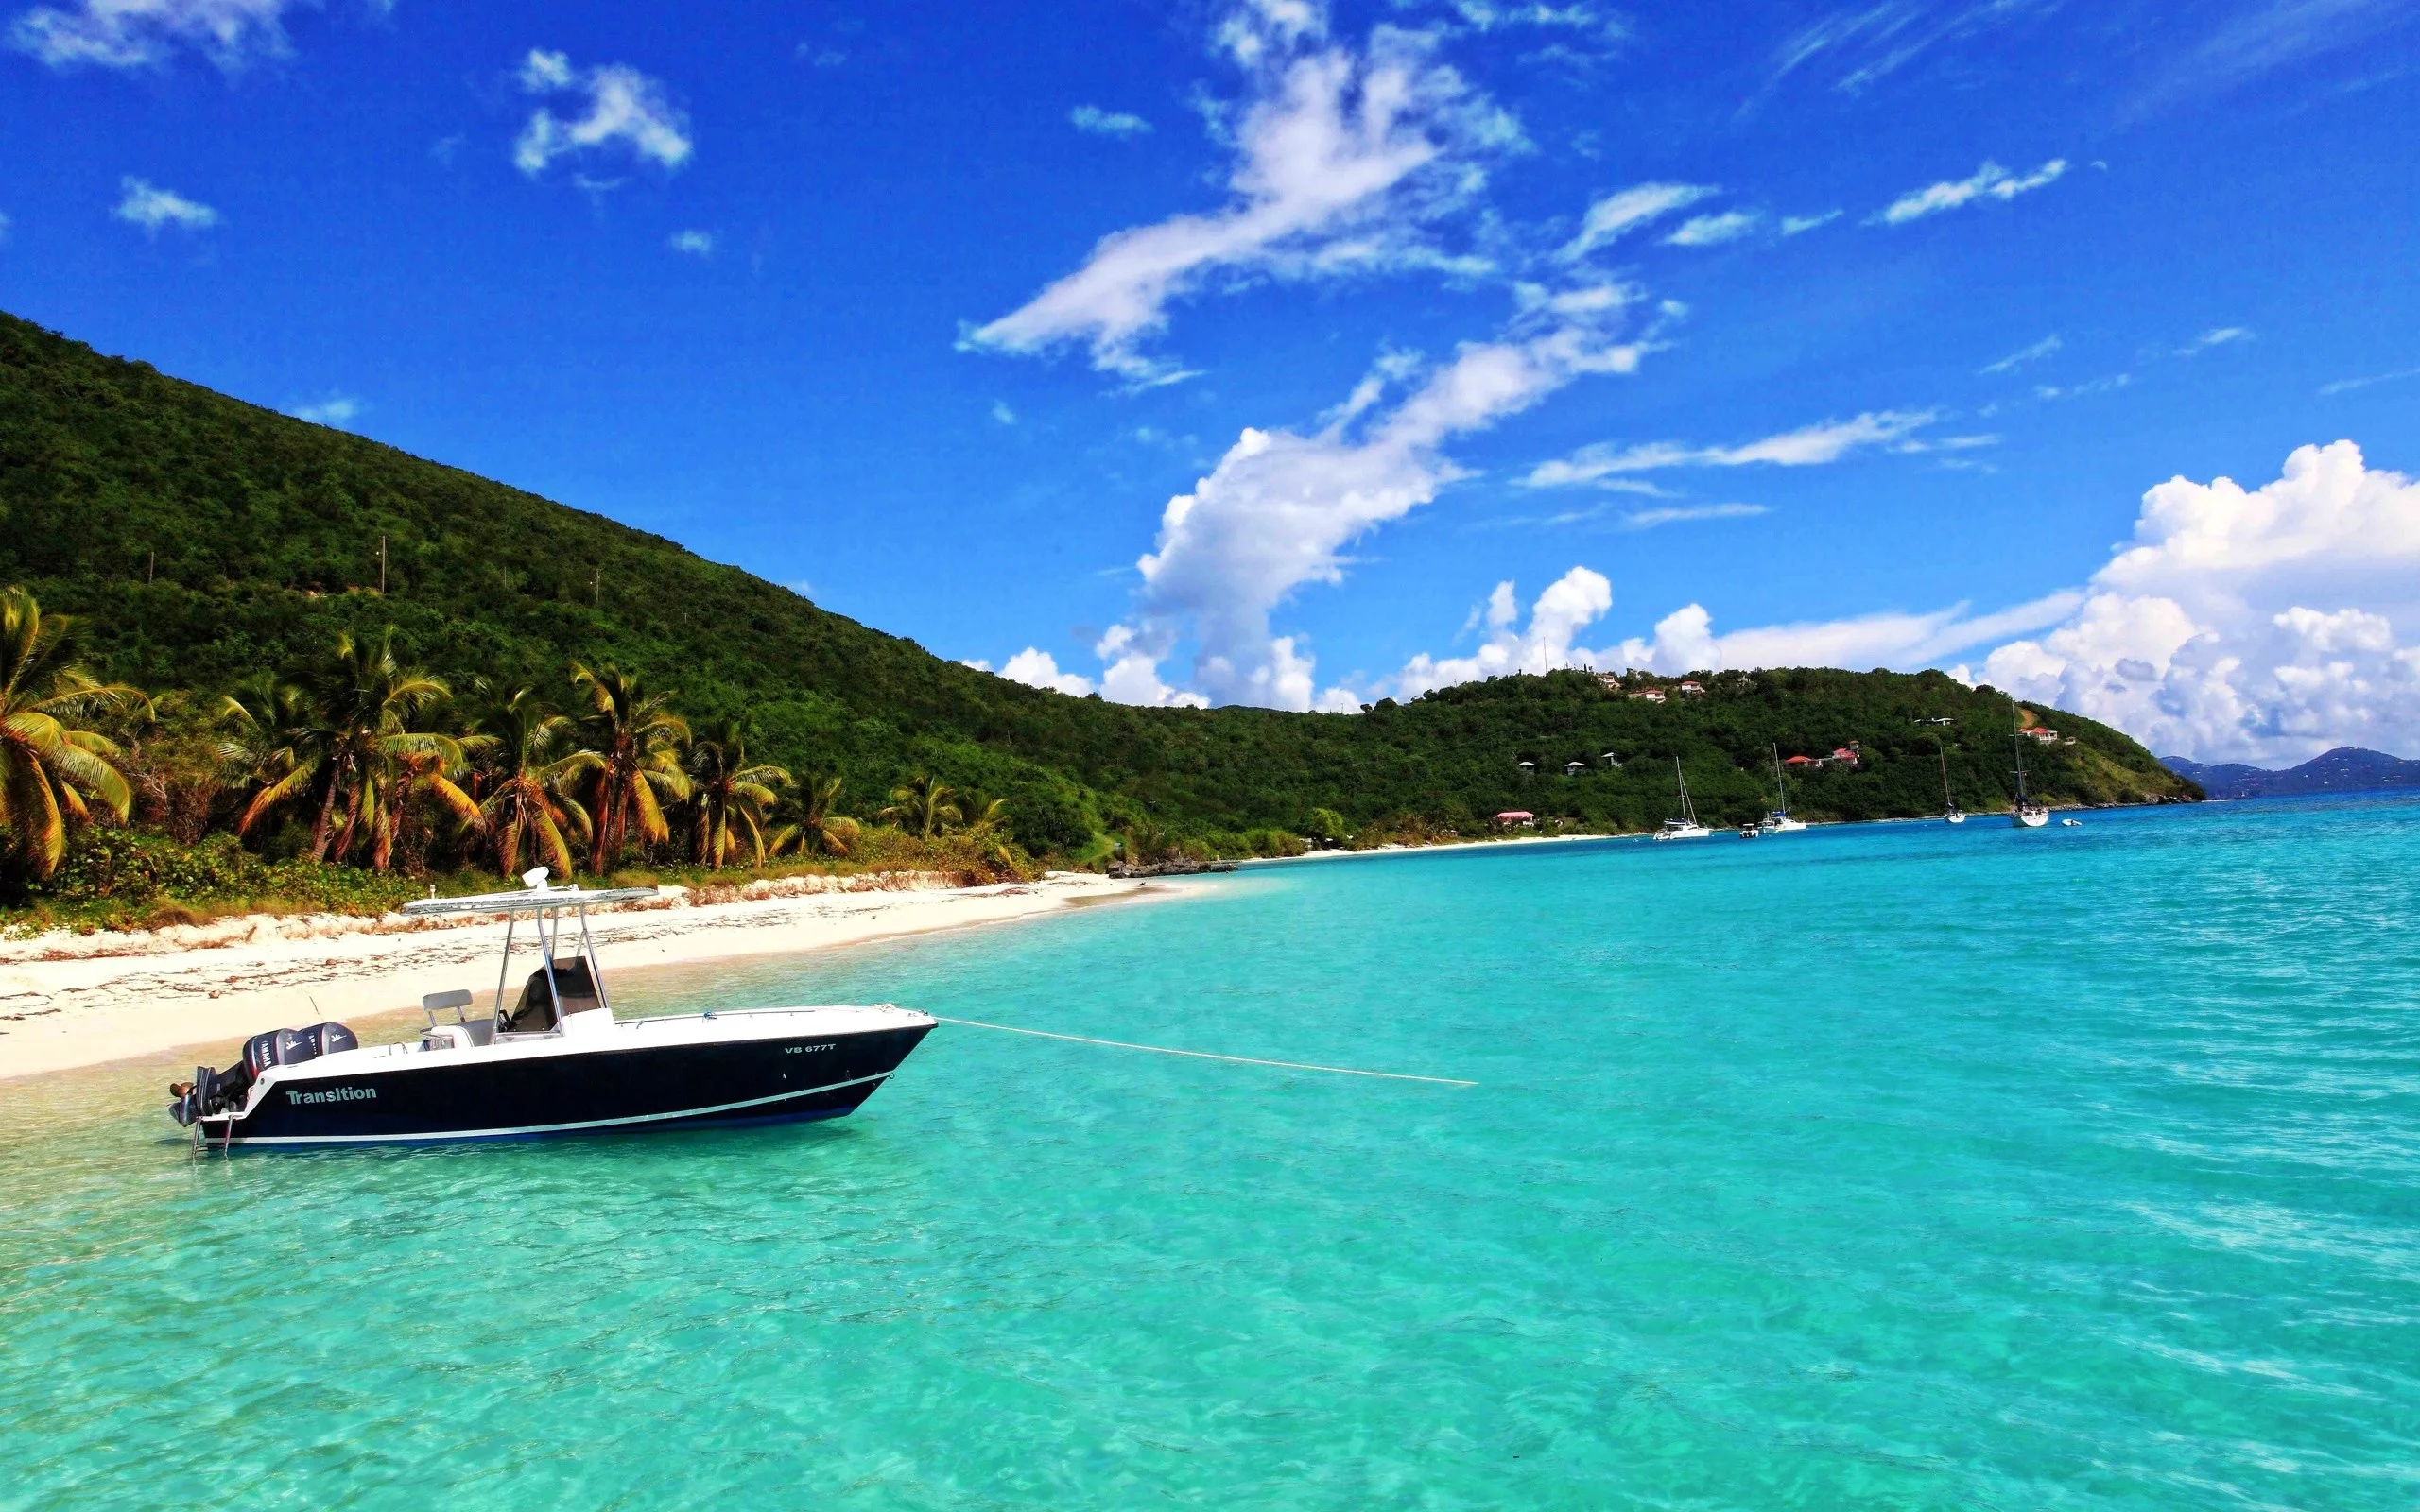 Boat on the Caribbean Island